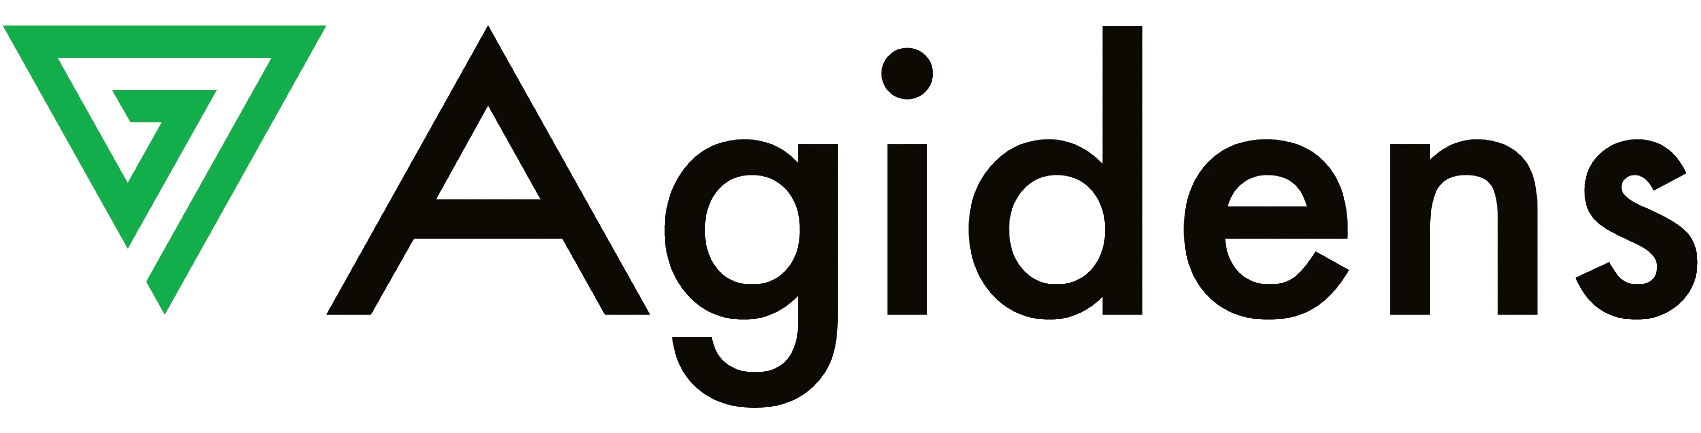 Agidens-logo1